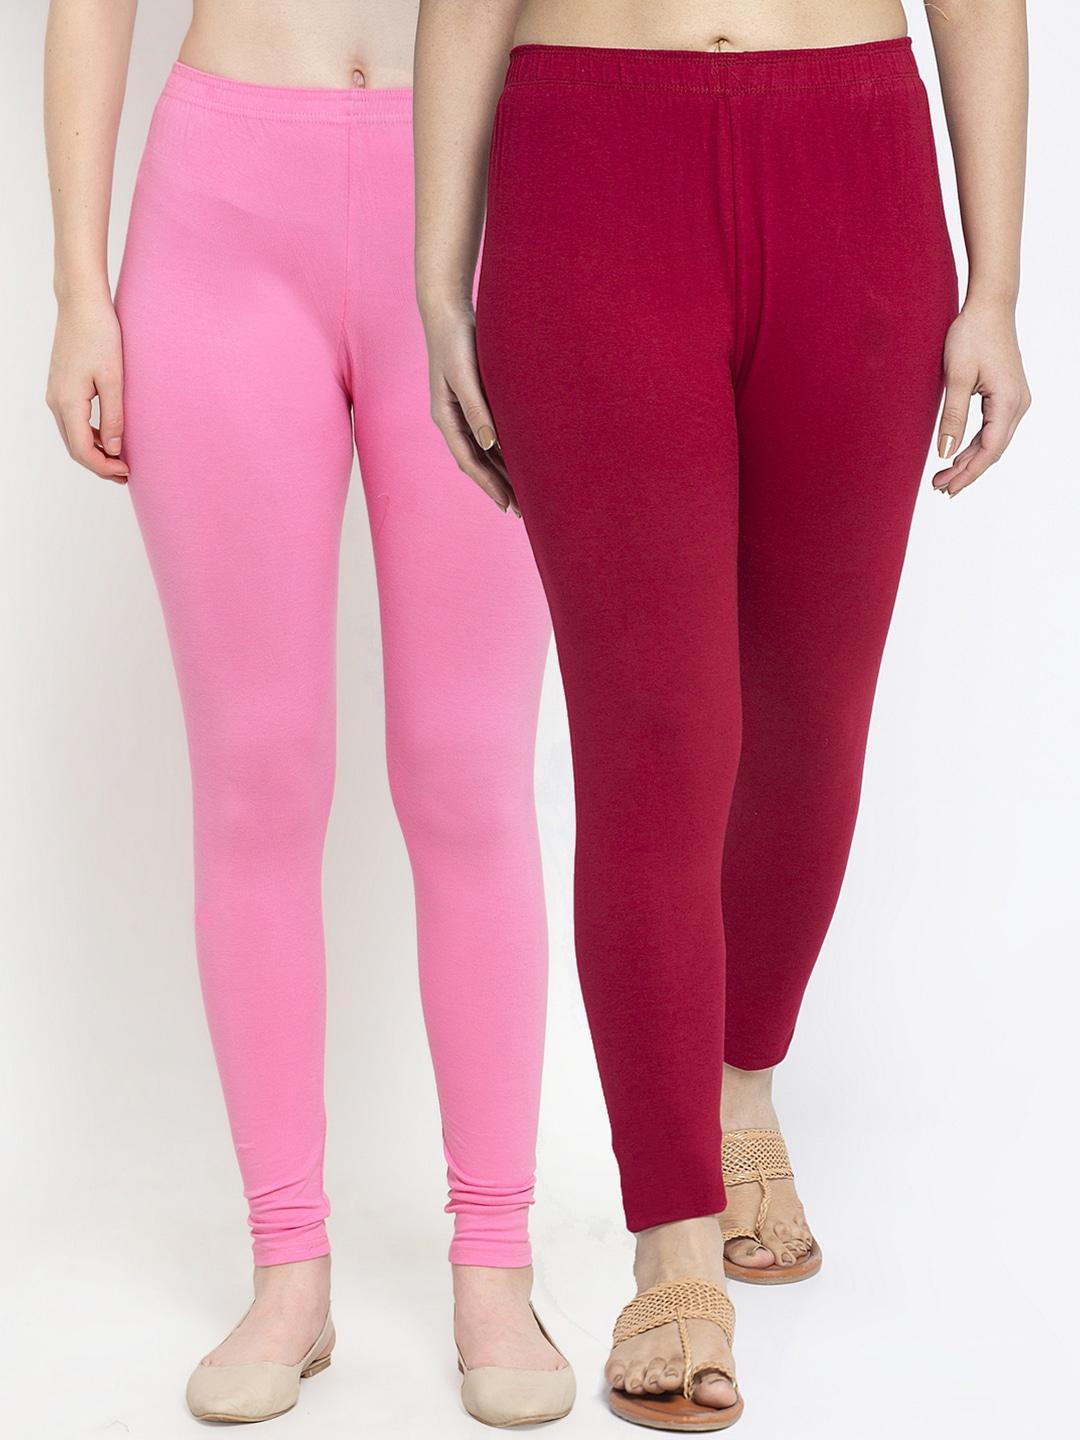 gracit women pack of 2 pink & maroon solid ankle length leggings